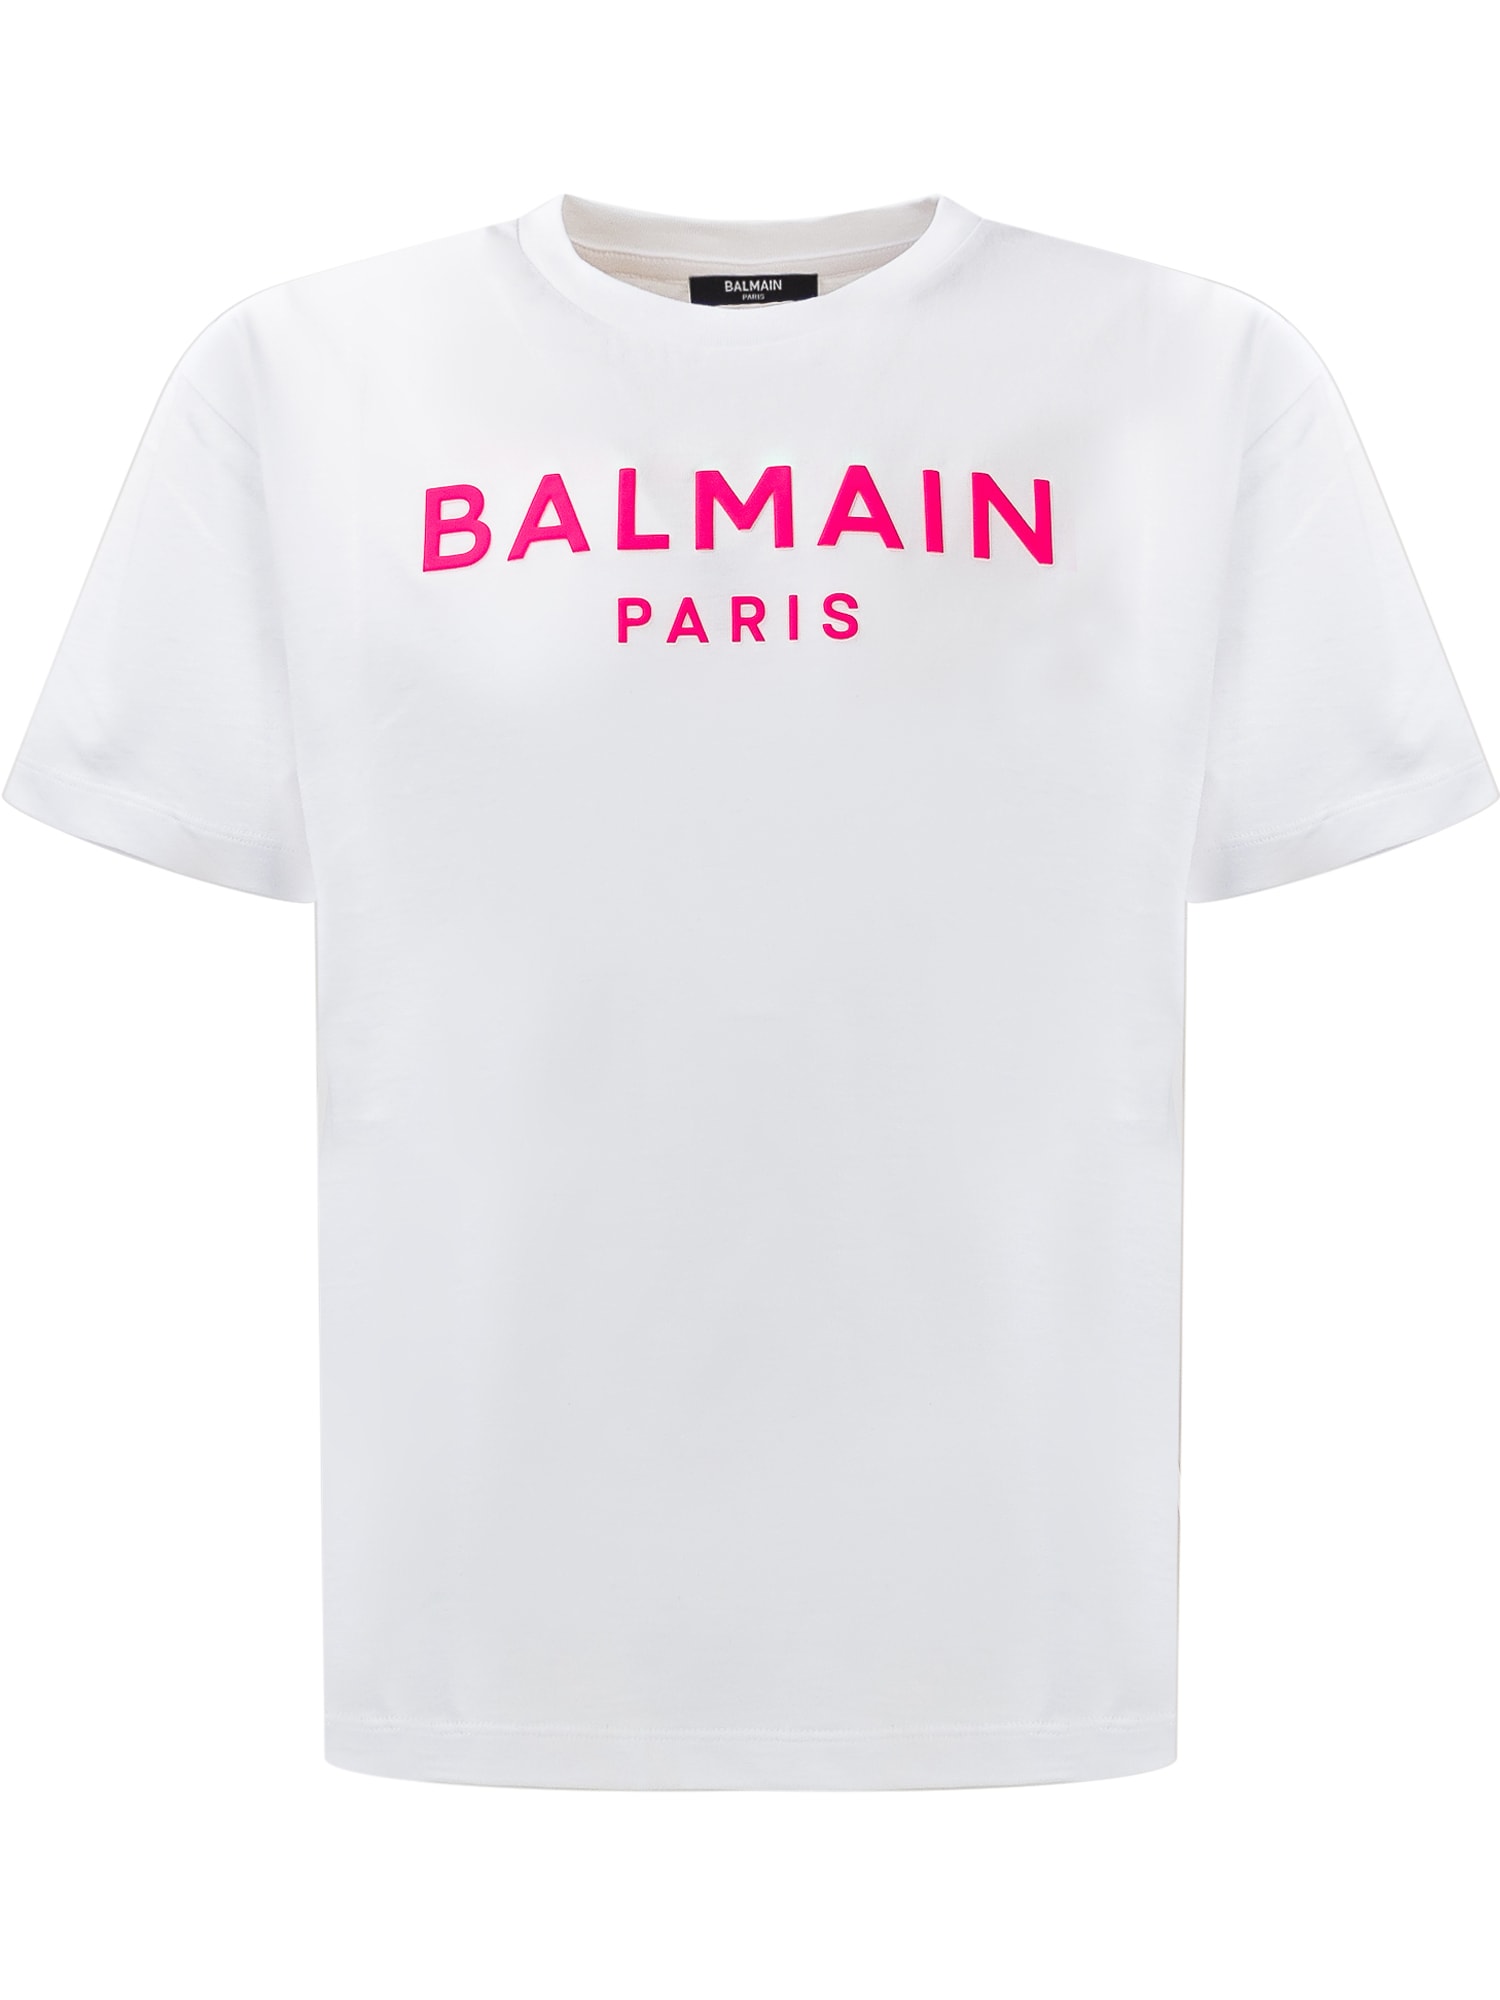 Balmain Kids' Logo T-shirt In White/fuchsia